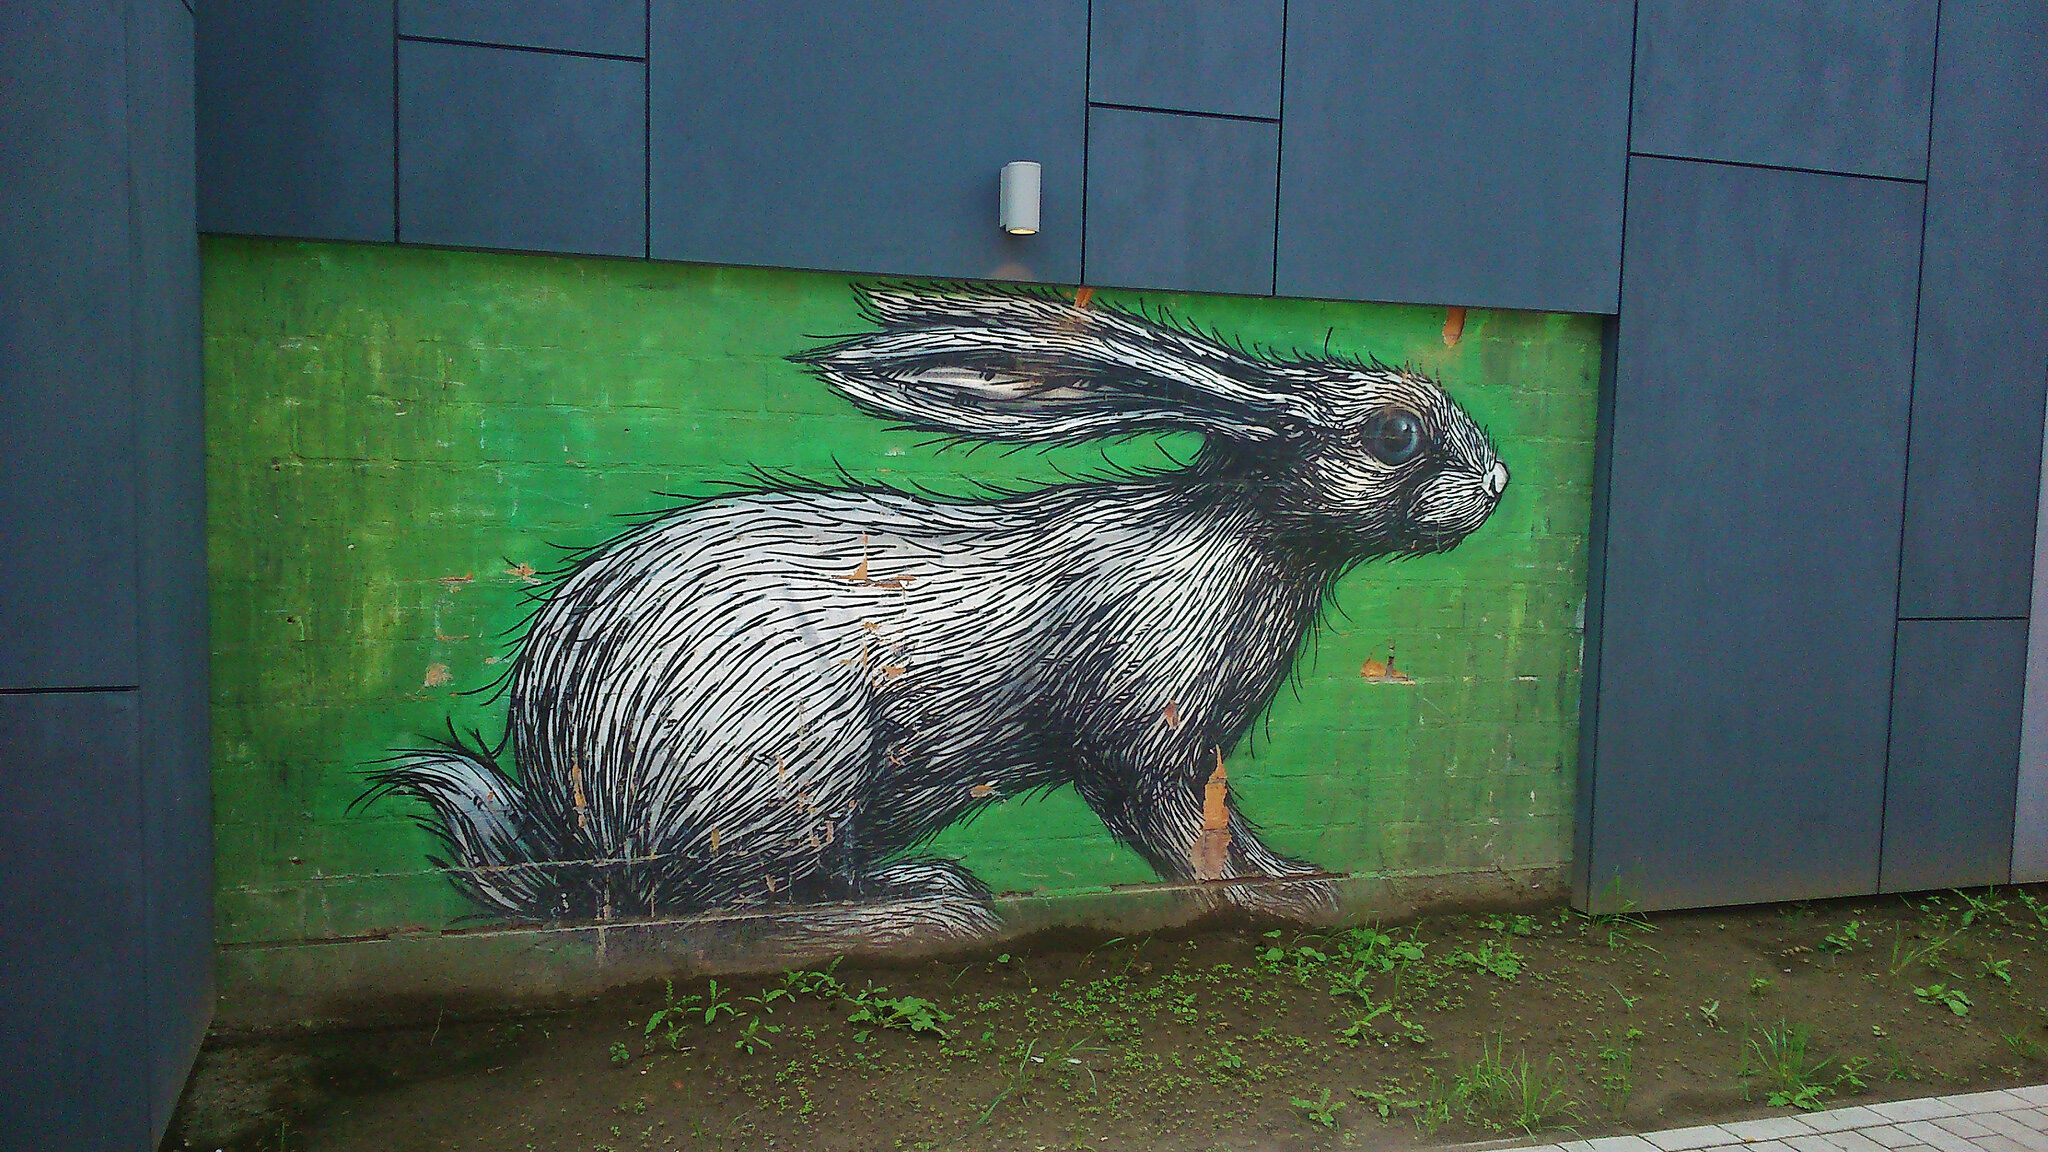 Roa&mdash;The rabbit